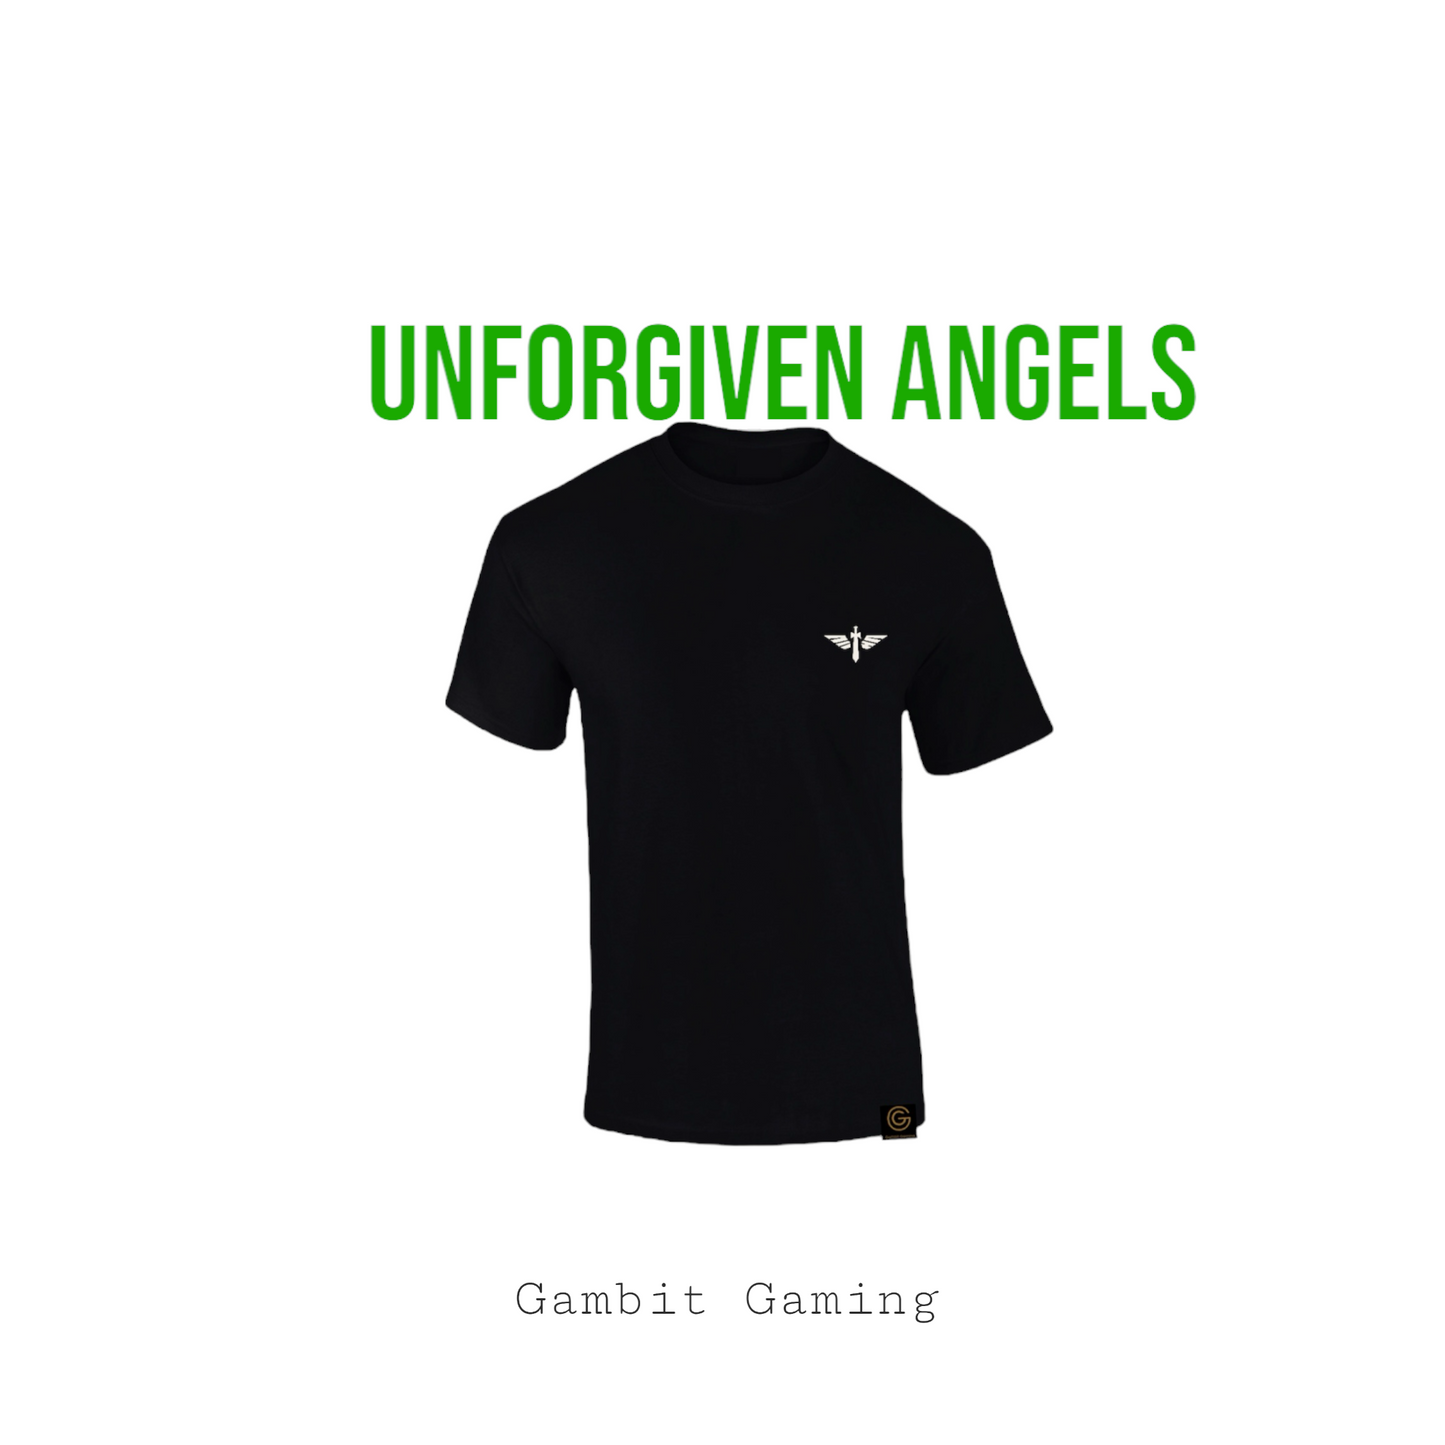 Unforgiven Angels